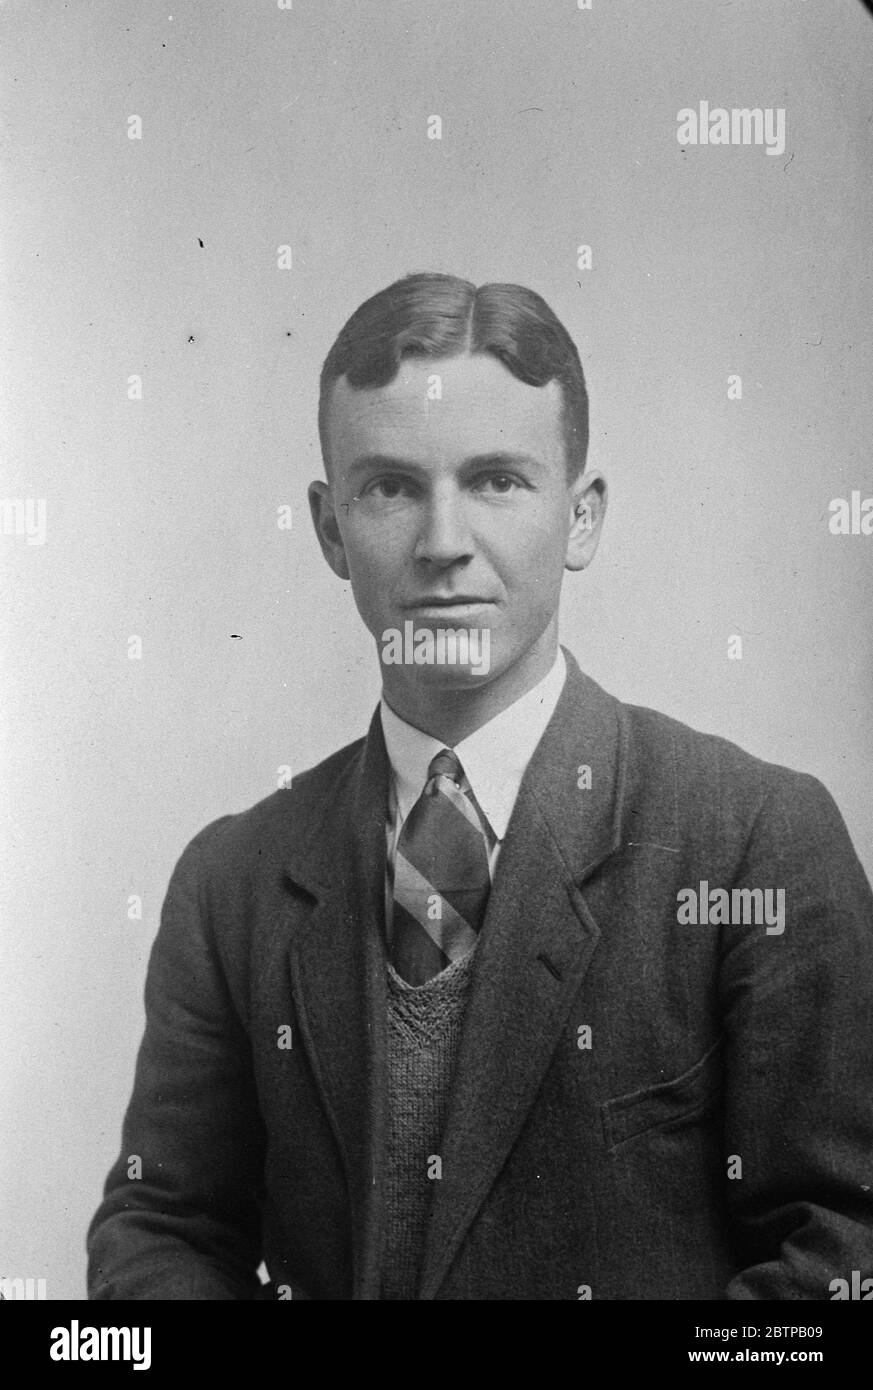 Yorkshire 's cricket captain . Mr A T Barber of Oxford University , who will captain the Yorkshire County Cricket team next season . 6 February 1930 Stock Photo